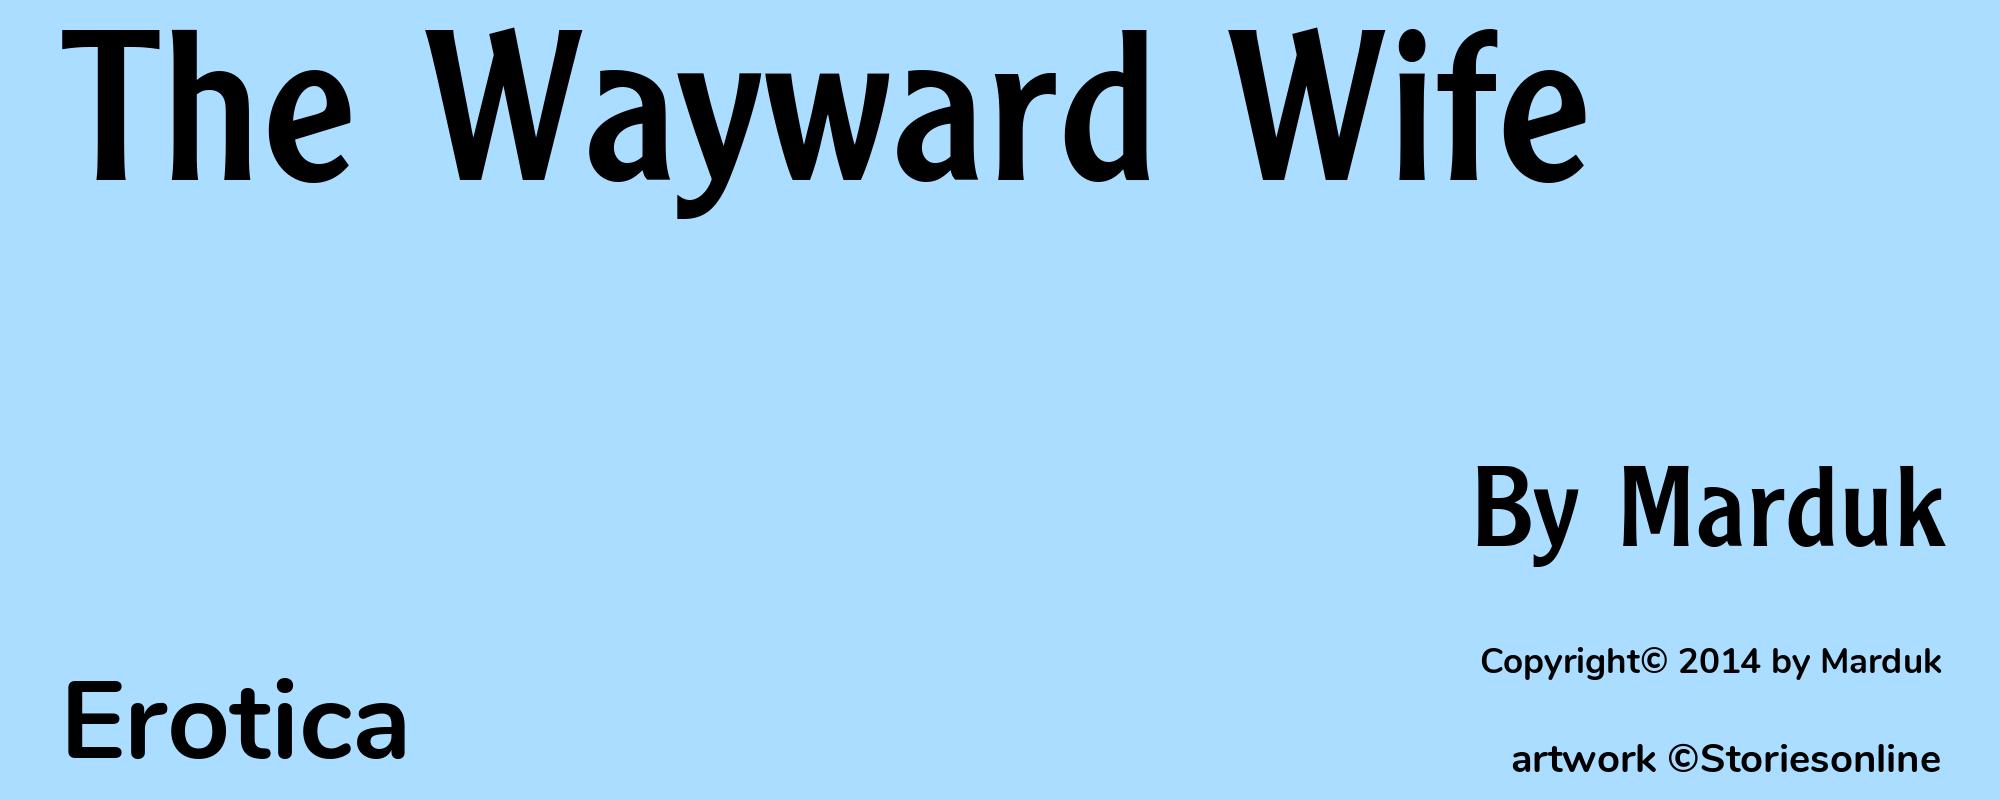 The Wayward Wife - Cover